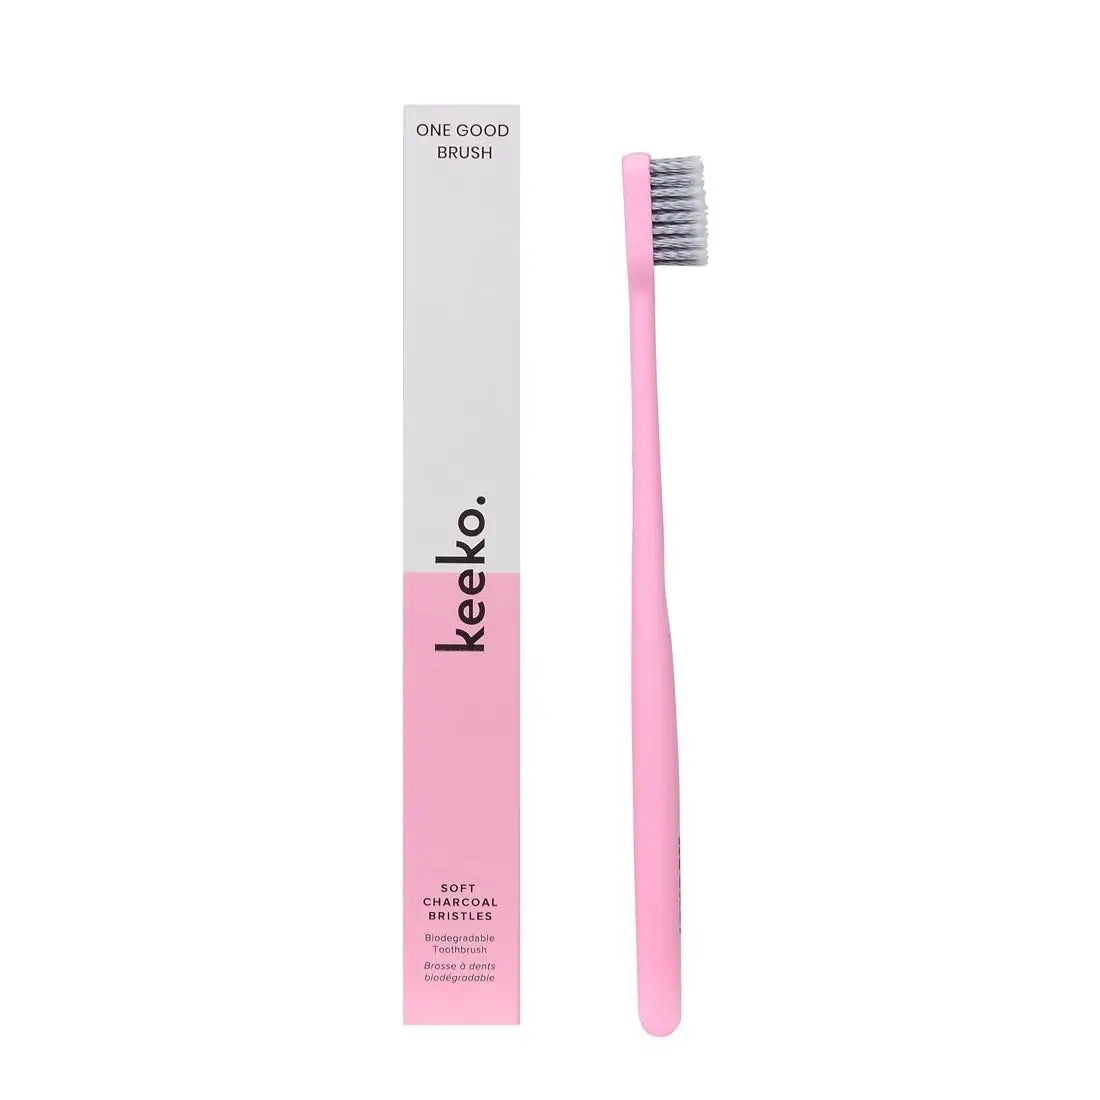 Keeko Oil One Good Brush - Biodegradable Toothbrush